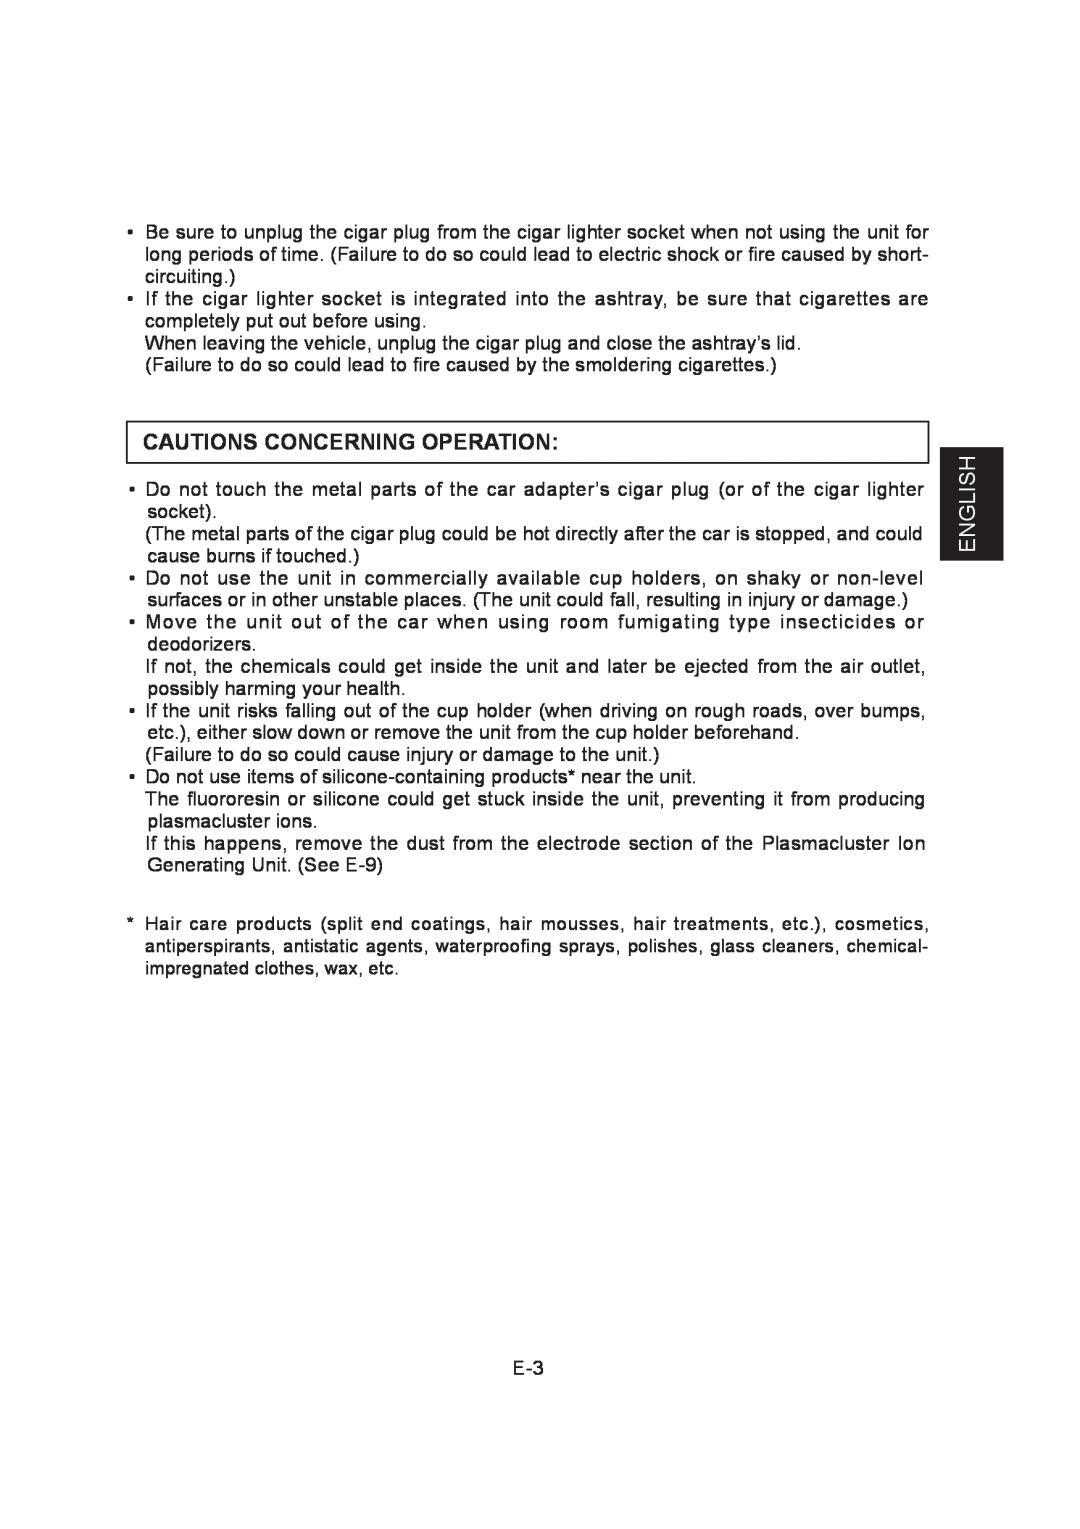 Sharp IG-BC2J operation manual Cautions Concerning Operation, English 